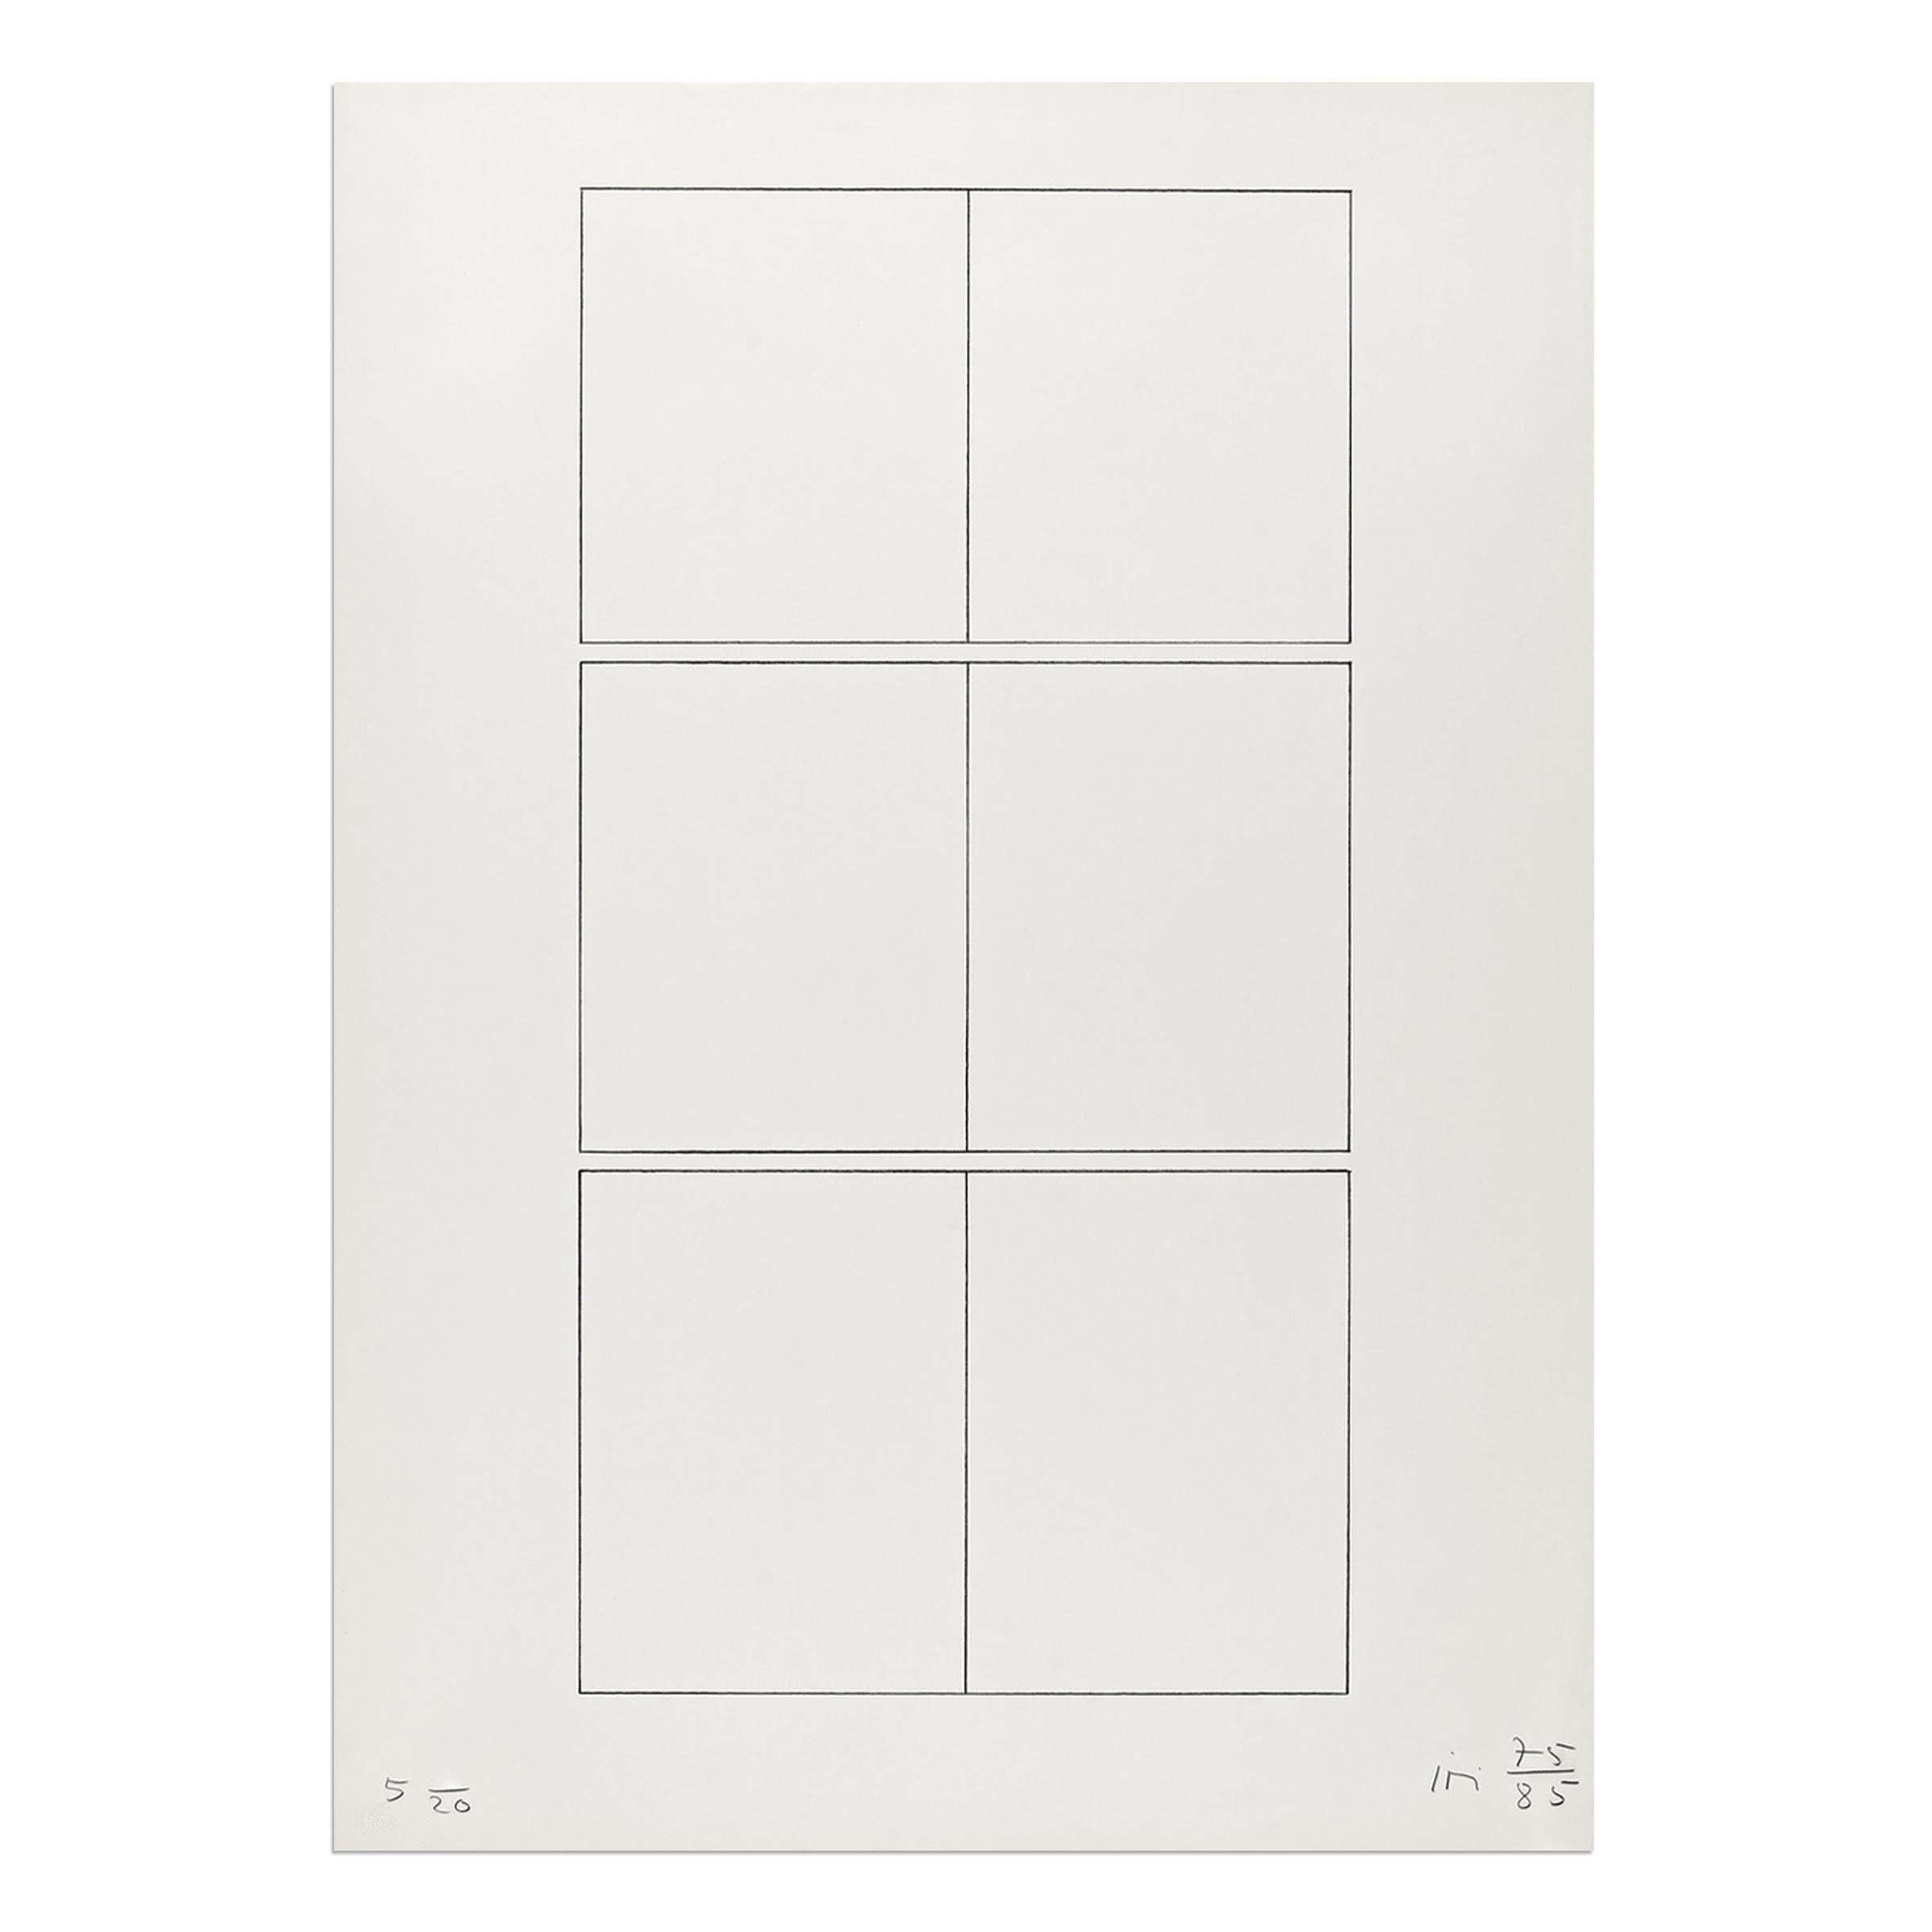 Imi Knoebel, Rote Konstellation - Suite of 6 Prints, Abstract Art, Minimalism For Sale 5